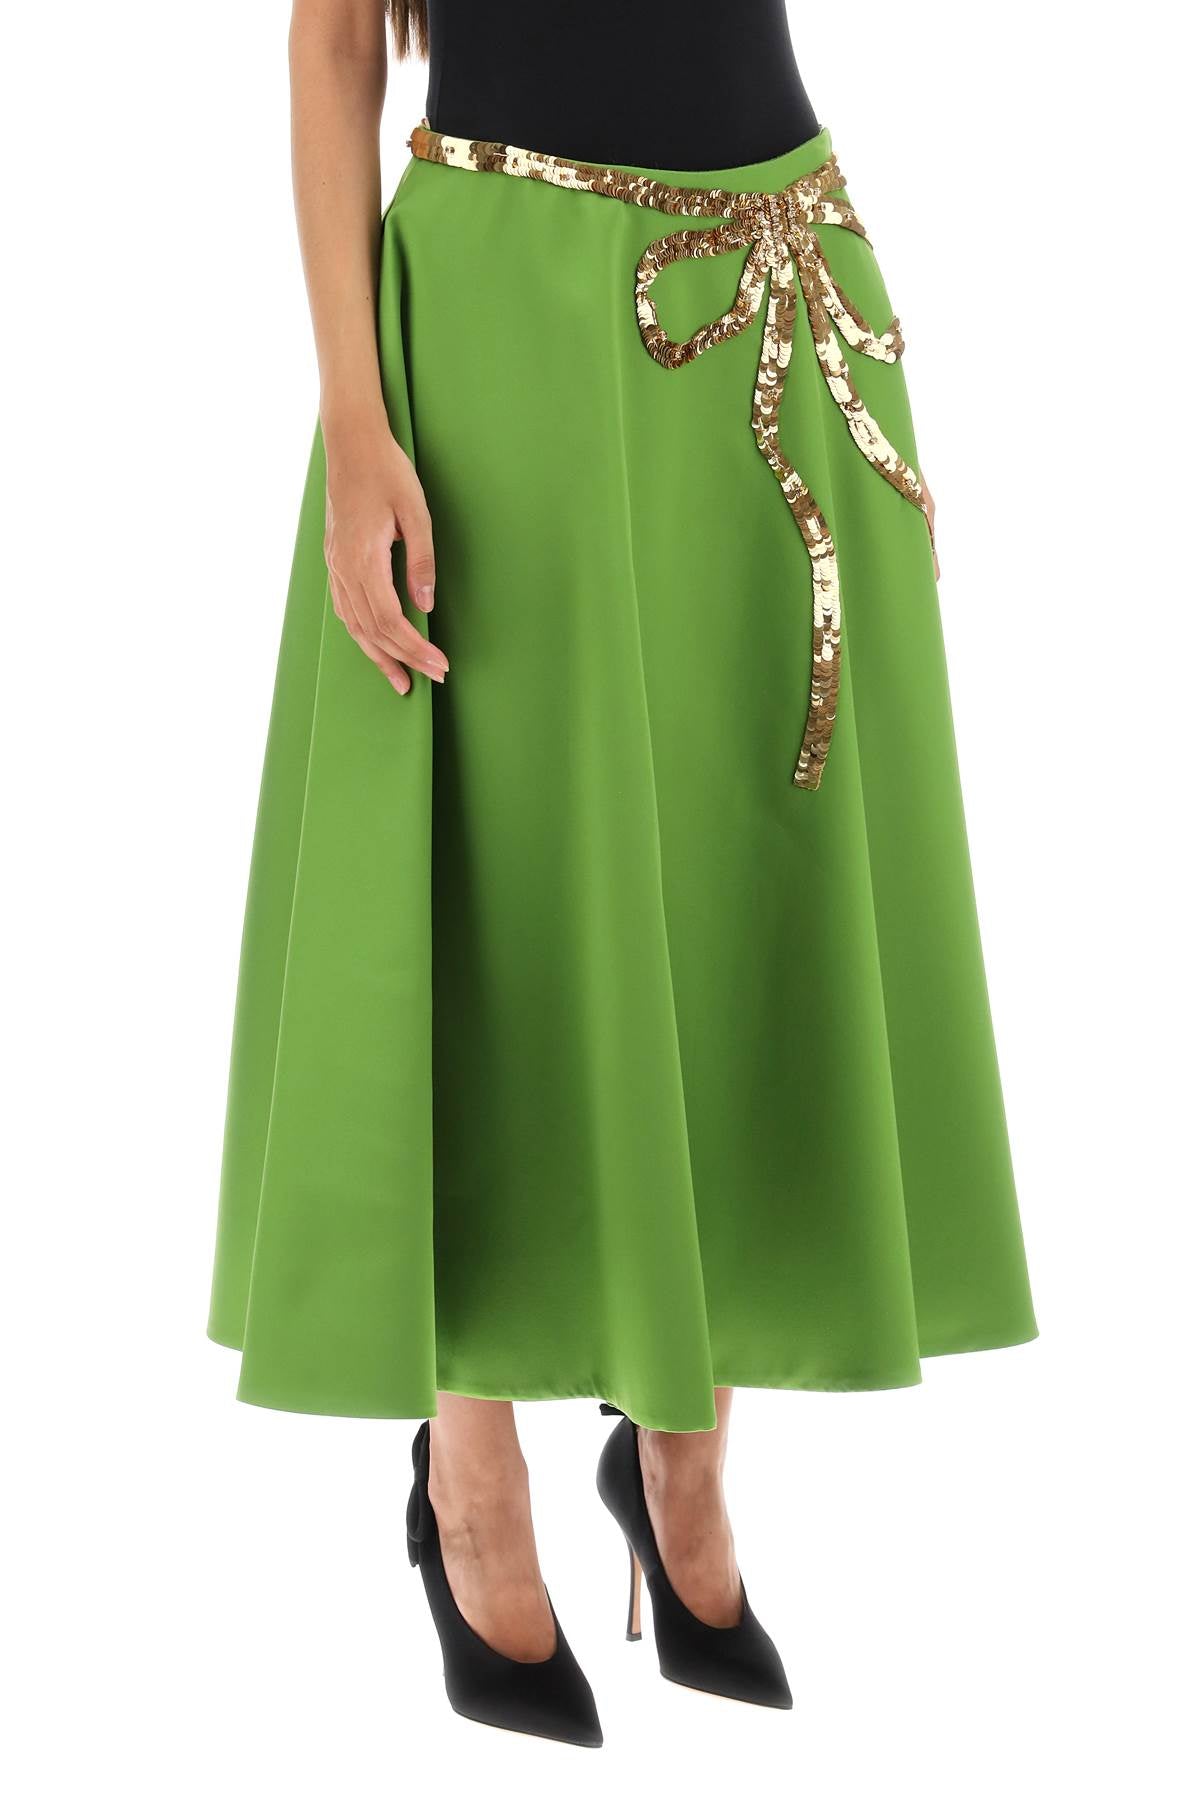 VALENTINO GARAVANI Green Sequin-Studded Bow A-Line Skirt for Women